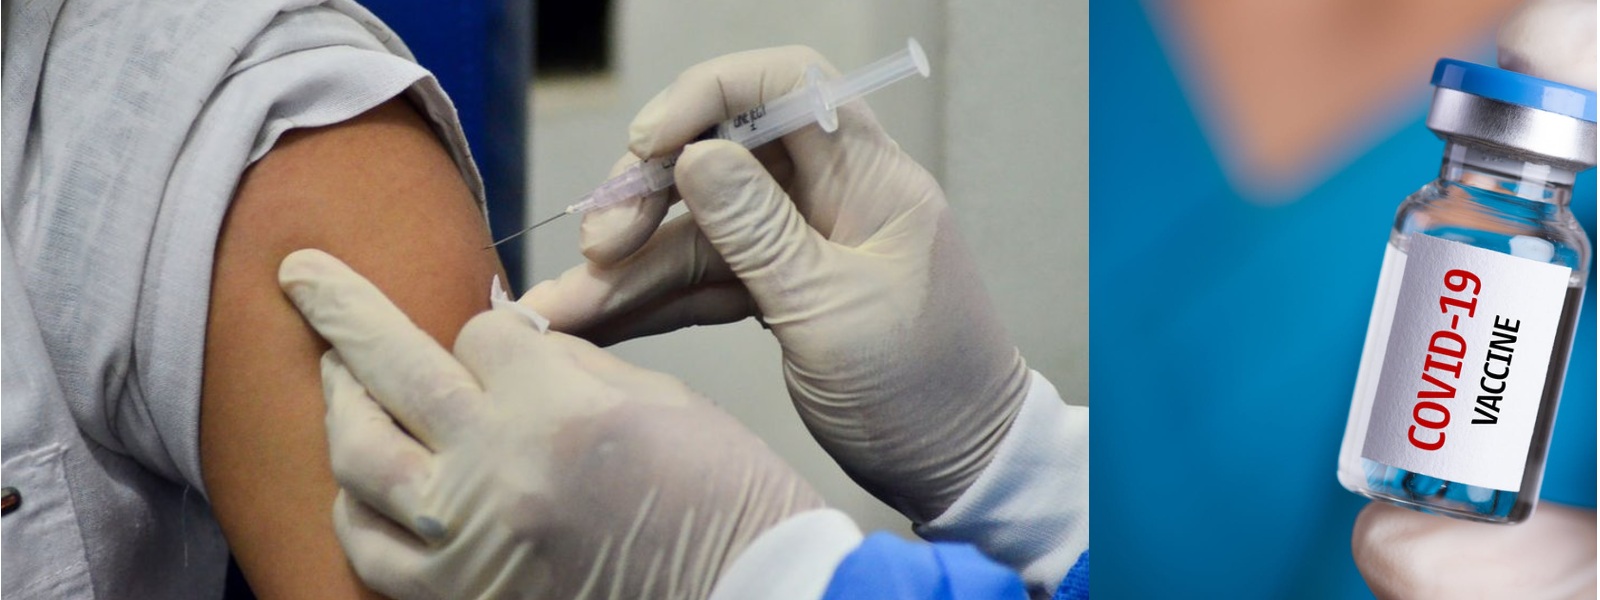 13 Million Sri Lankans to be vaccinated to prevent COVID-19 spread